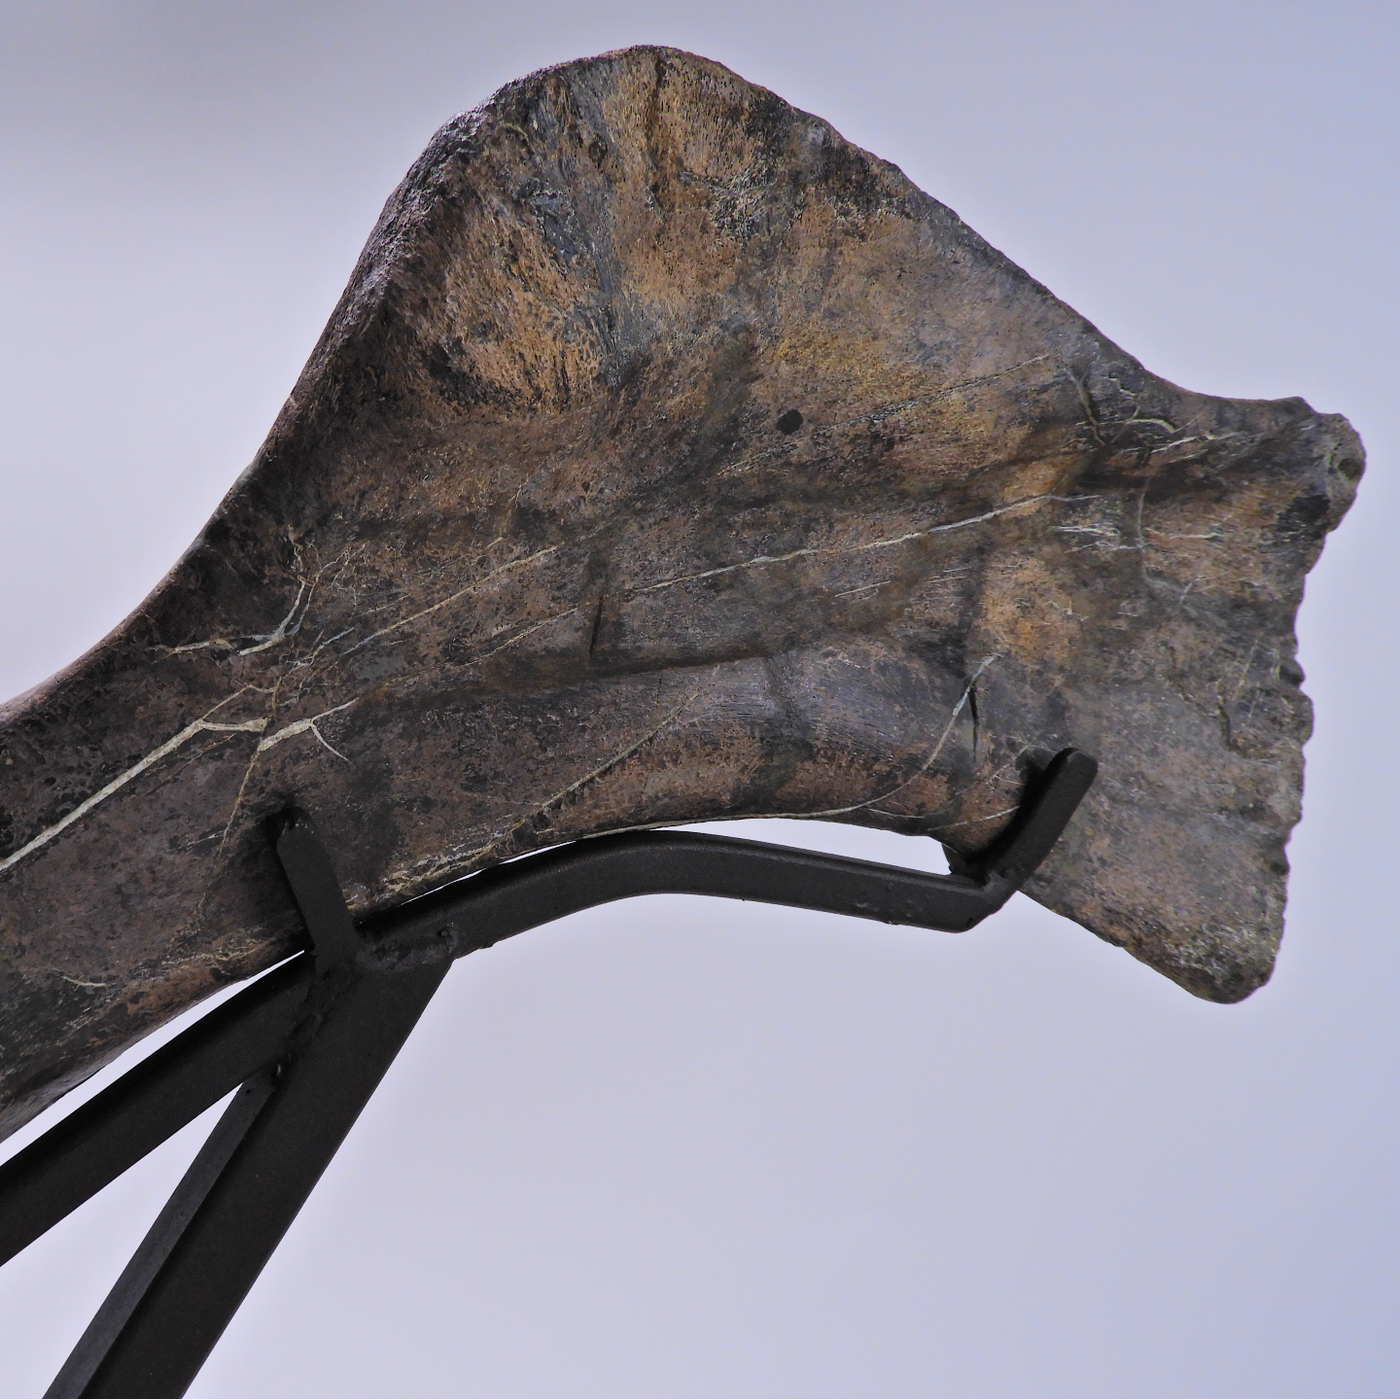 Duckbill Dinosaur Humerus Bone